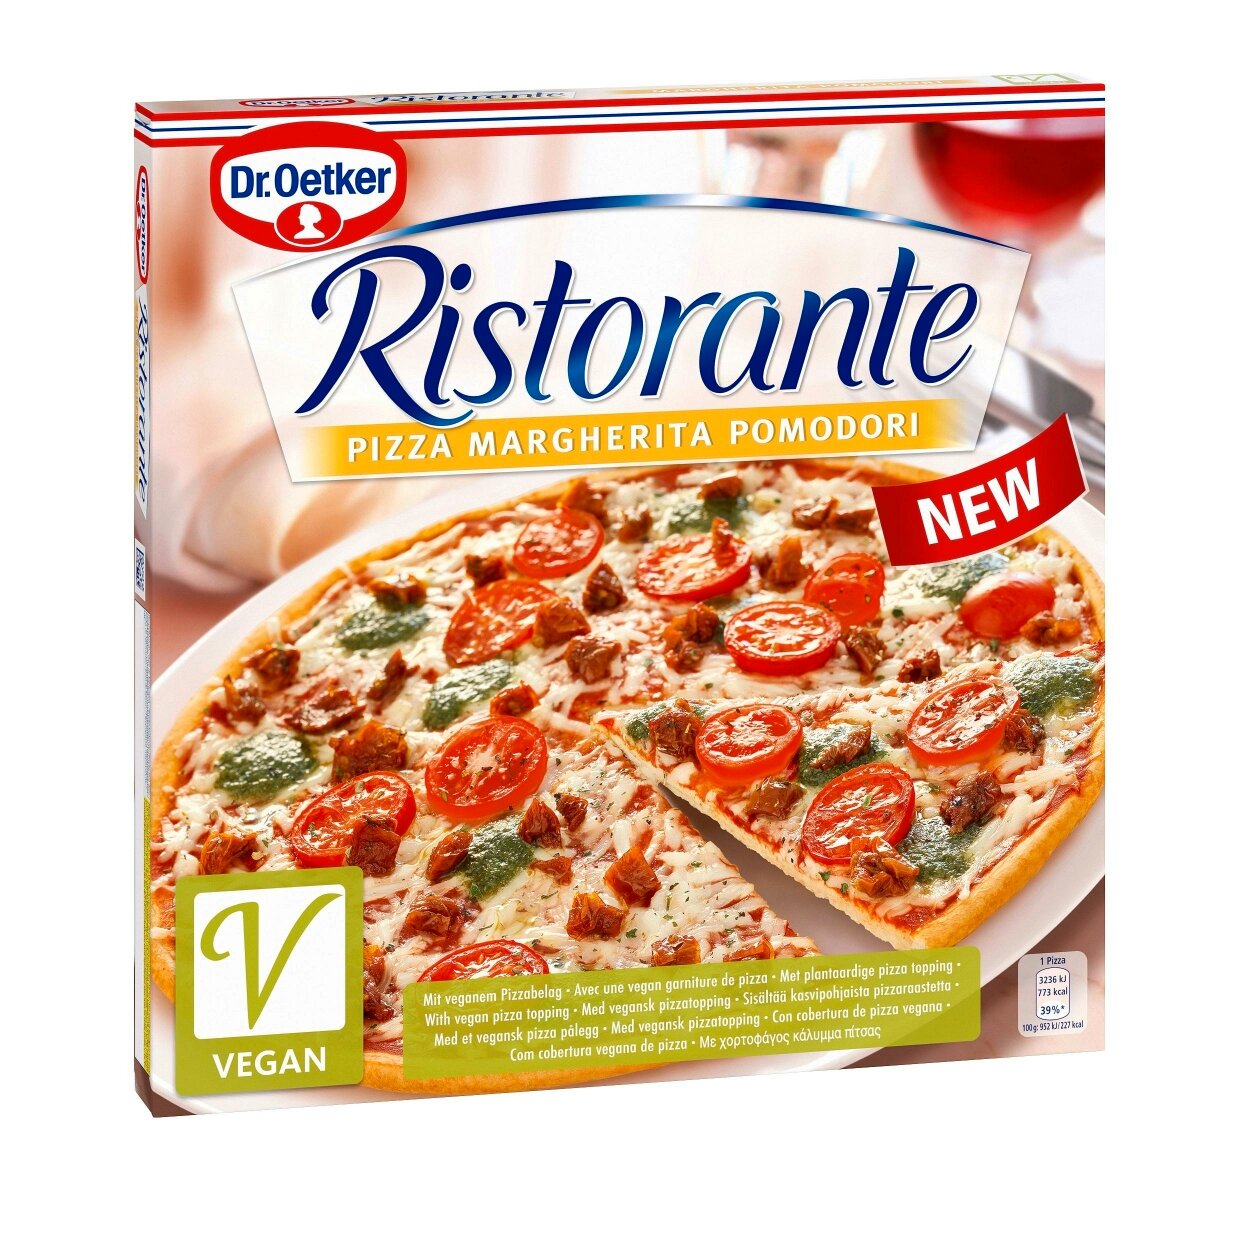 Die erste vegane Pizza im Ristorante